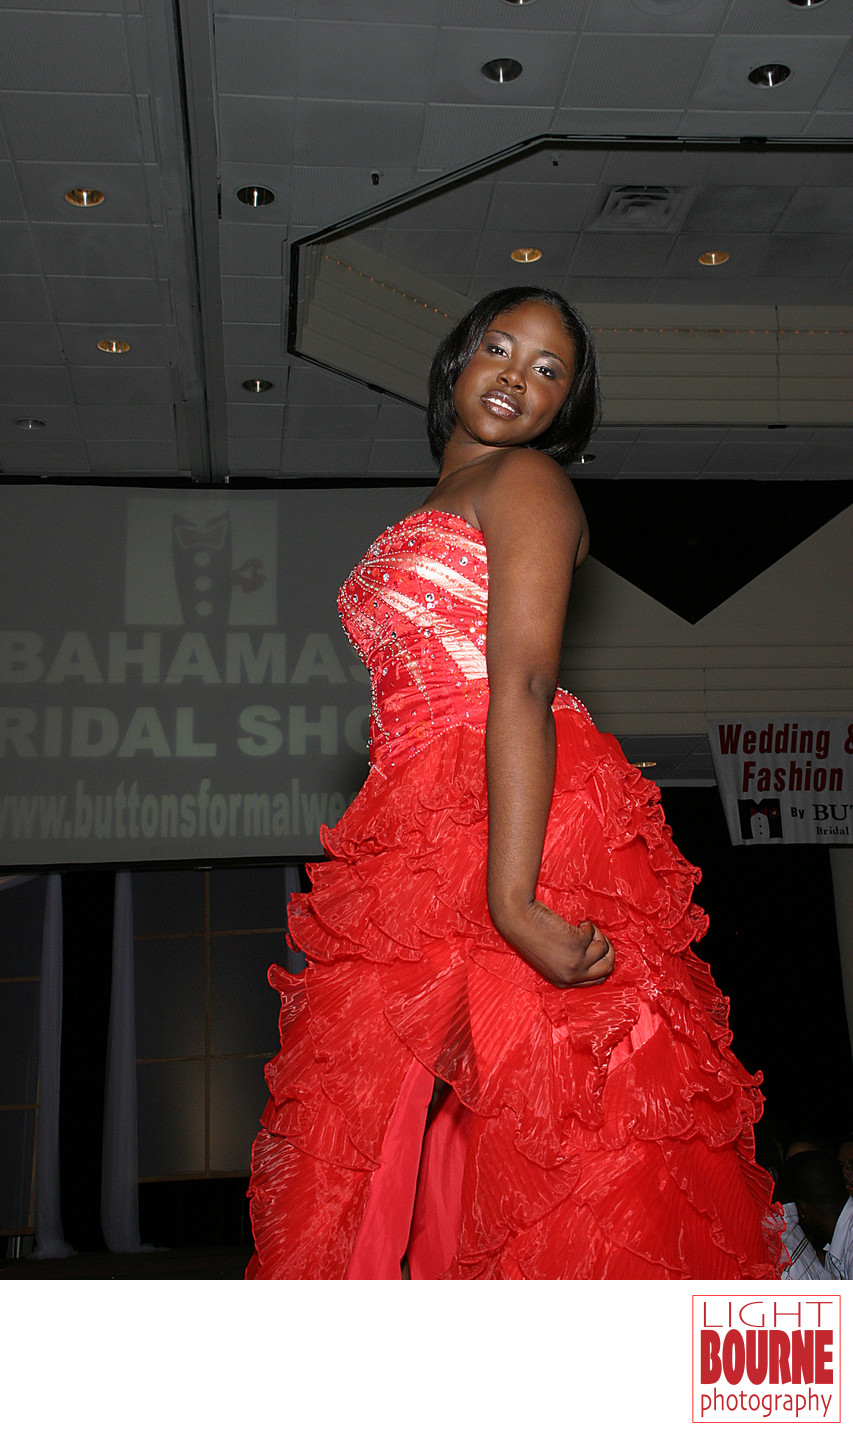 Bahamas Fashion Model